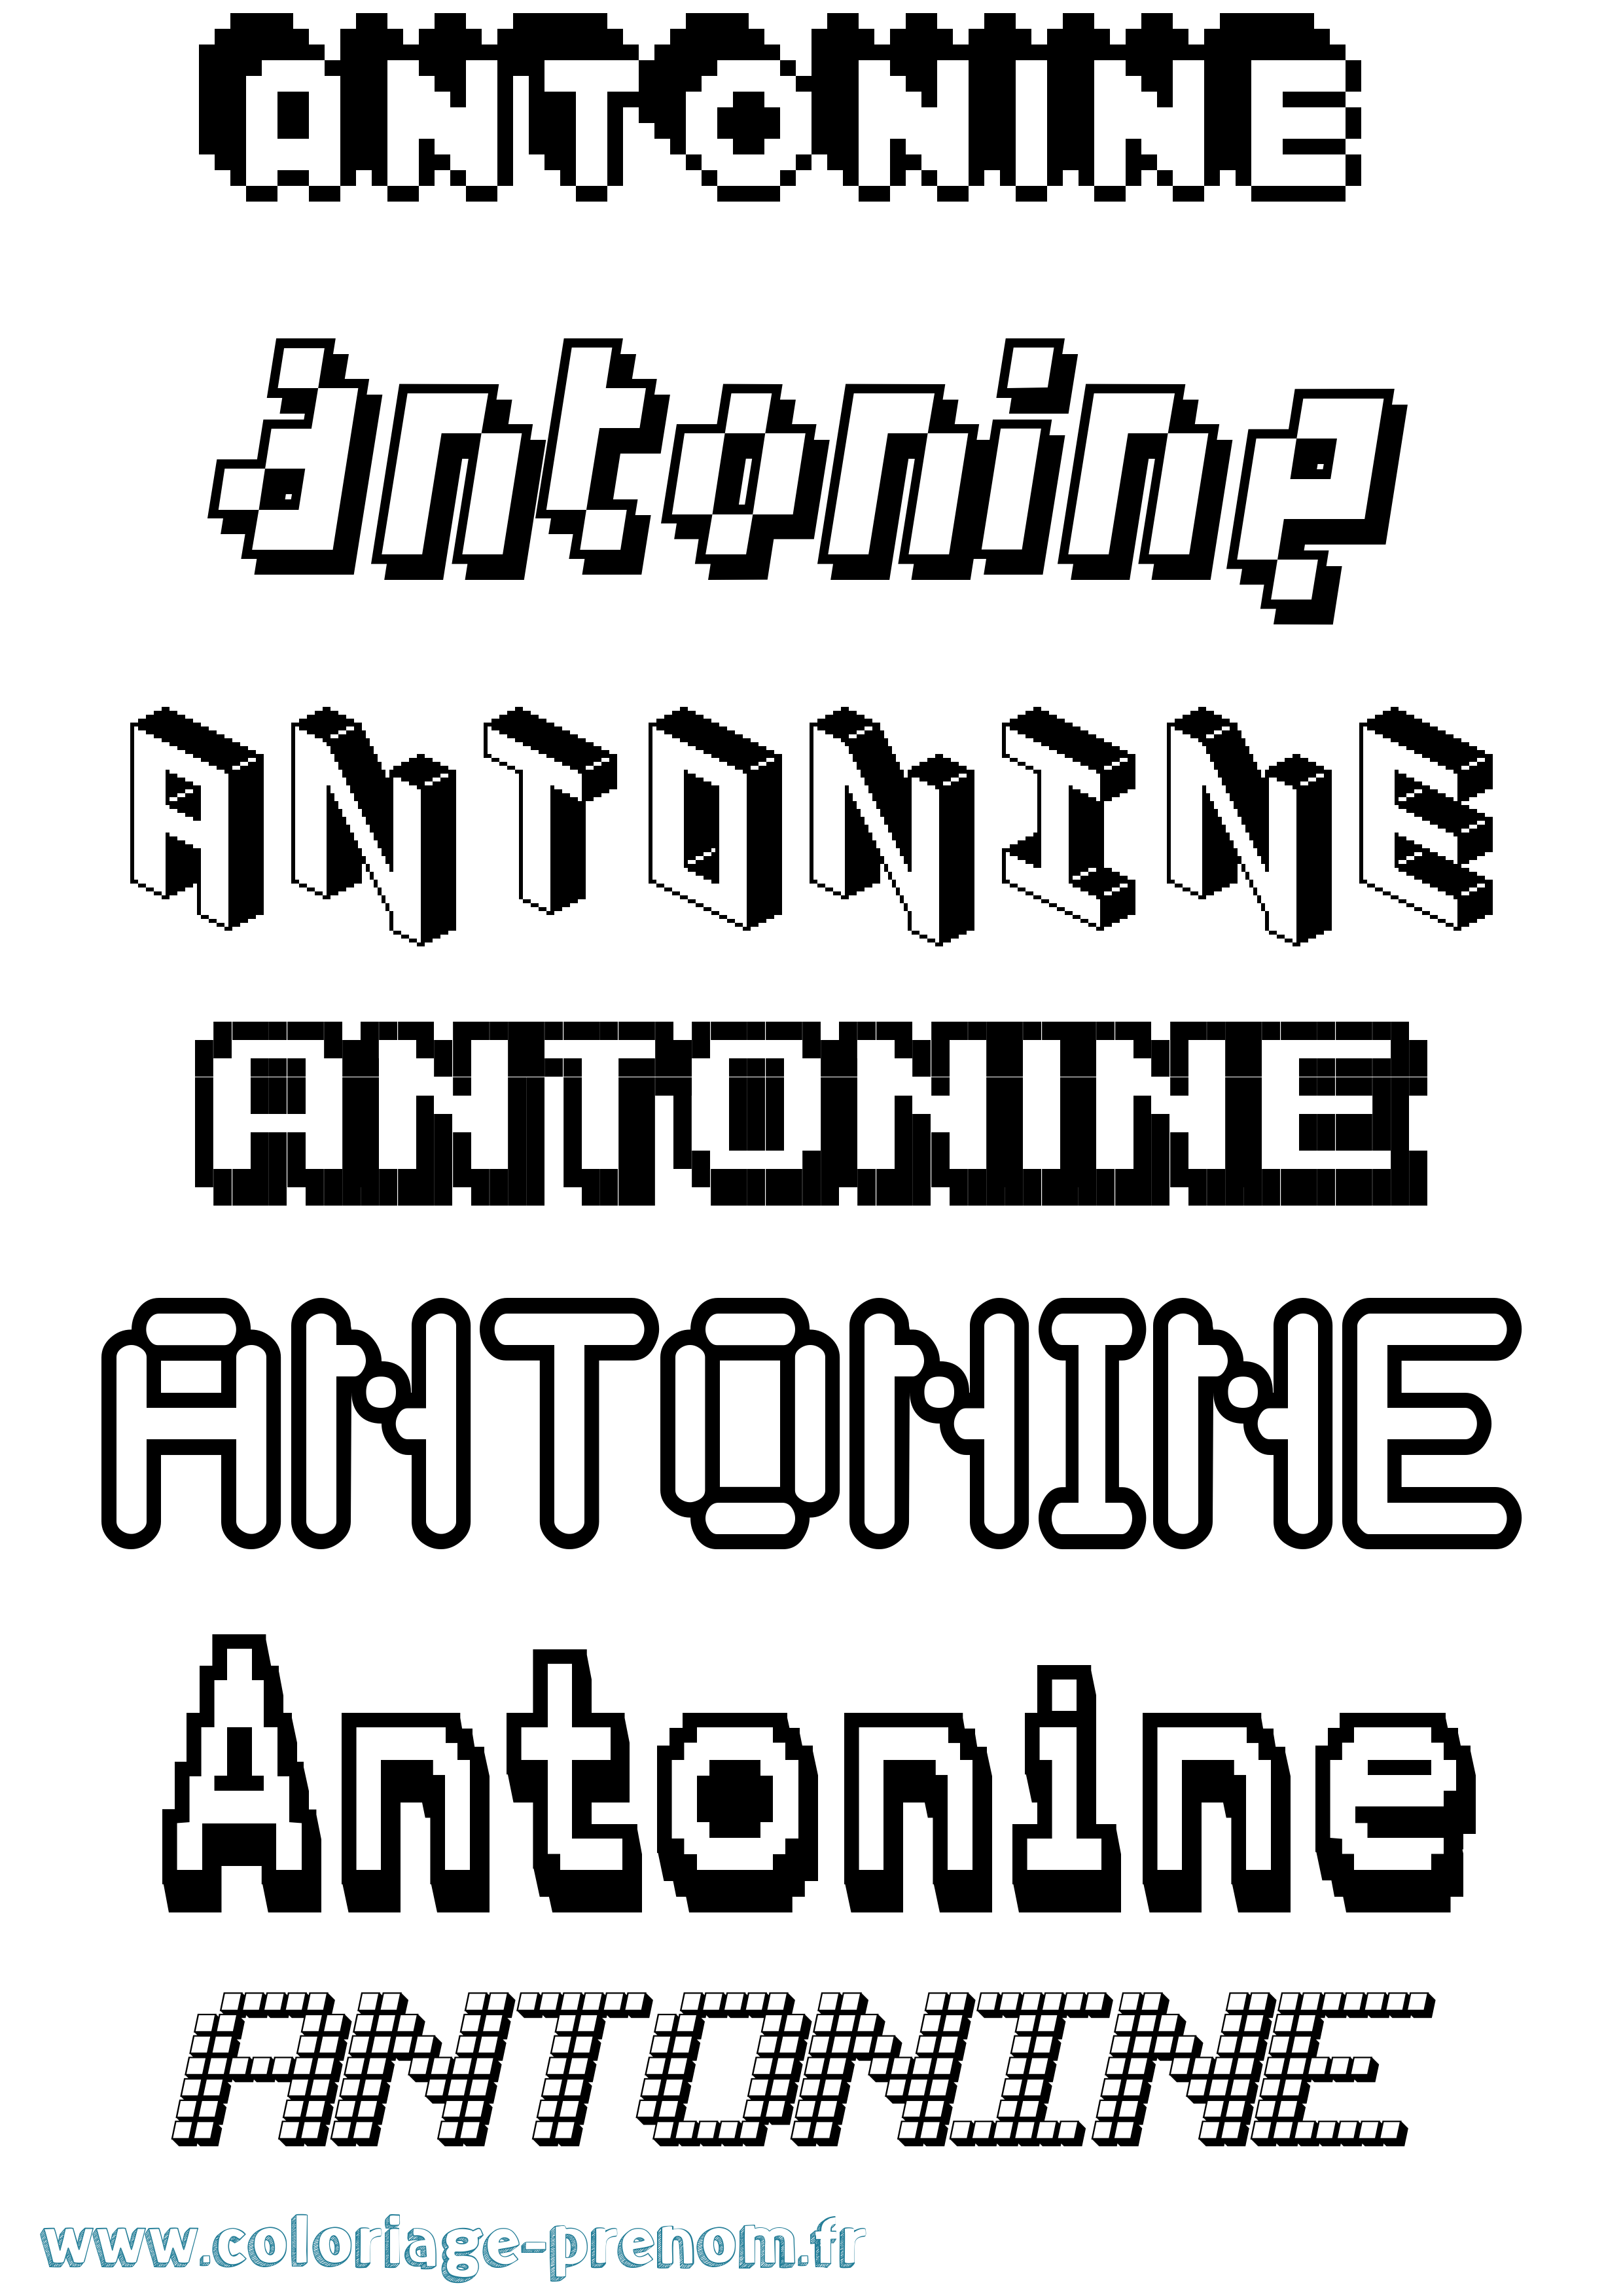 Coloriage prénom Antonine Pixel